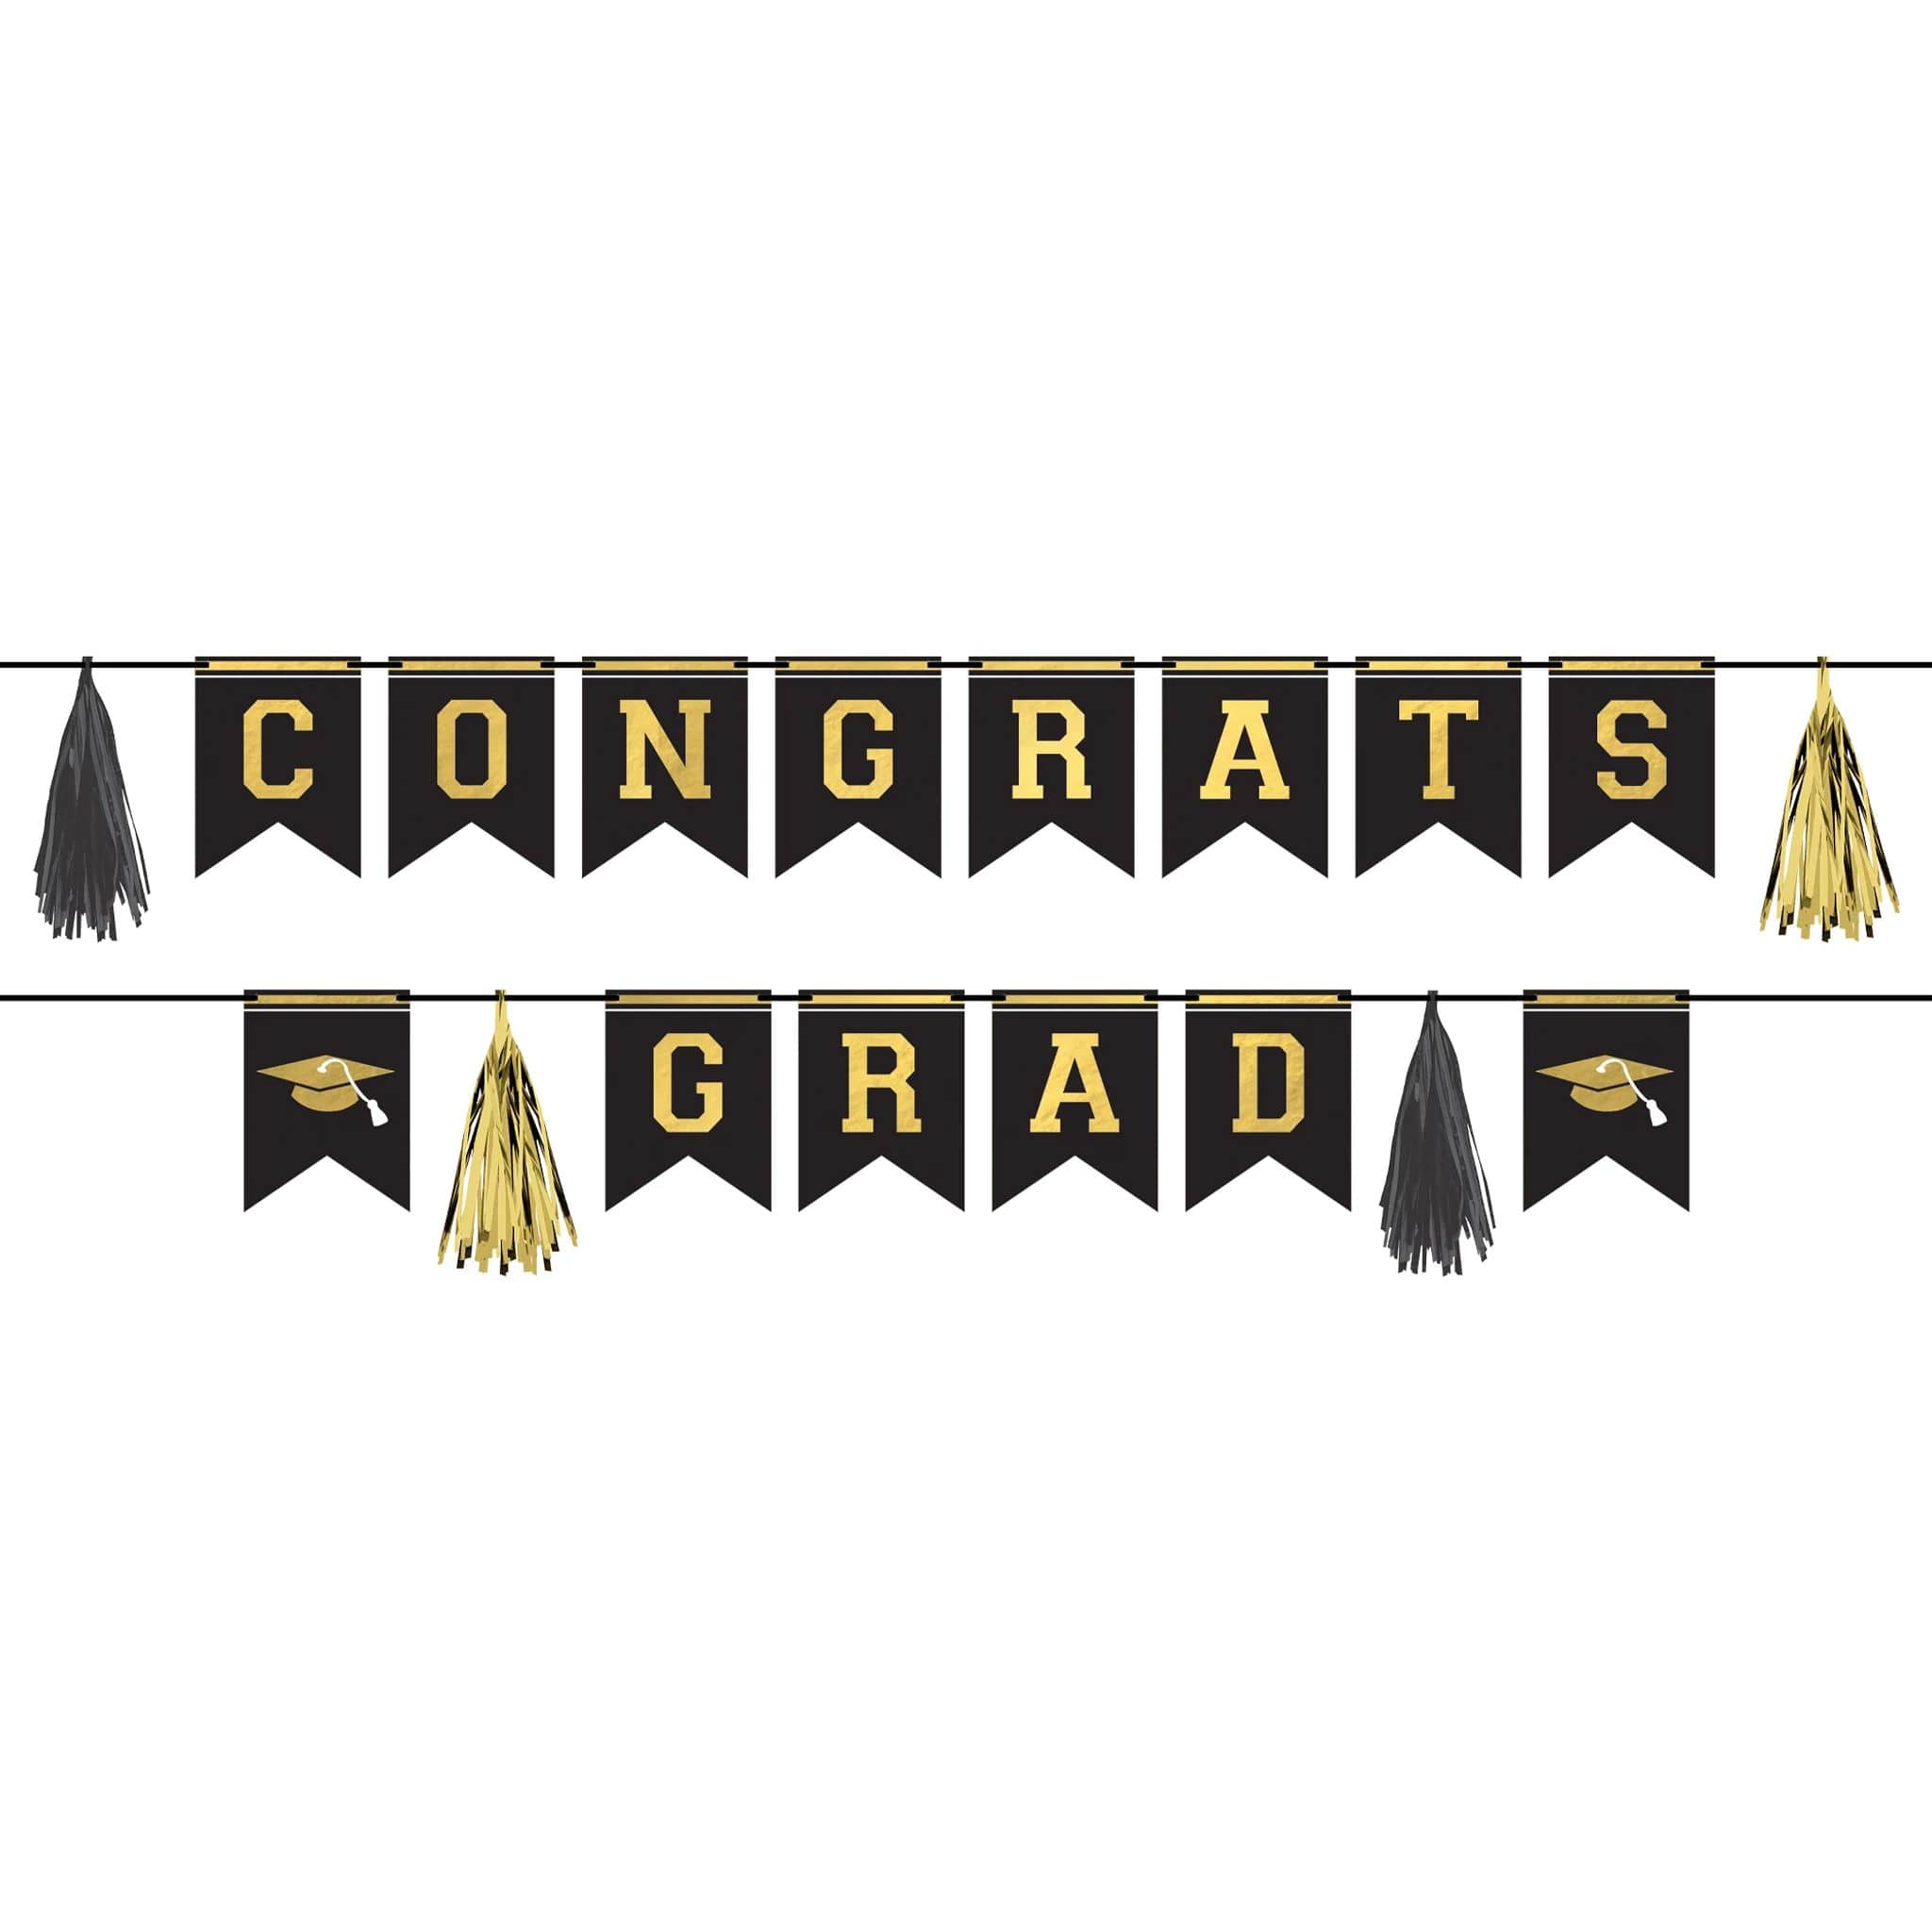 10ft. Congrats Graduate Pennant Banner Set